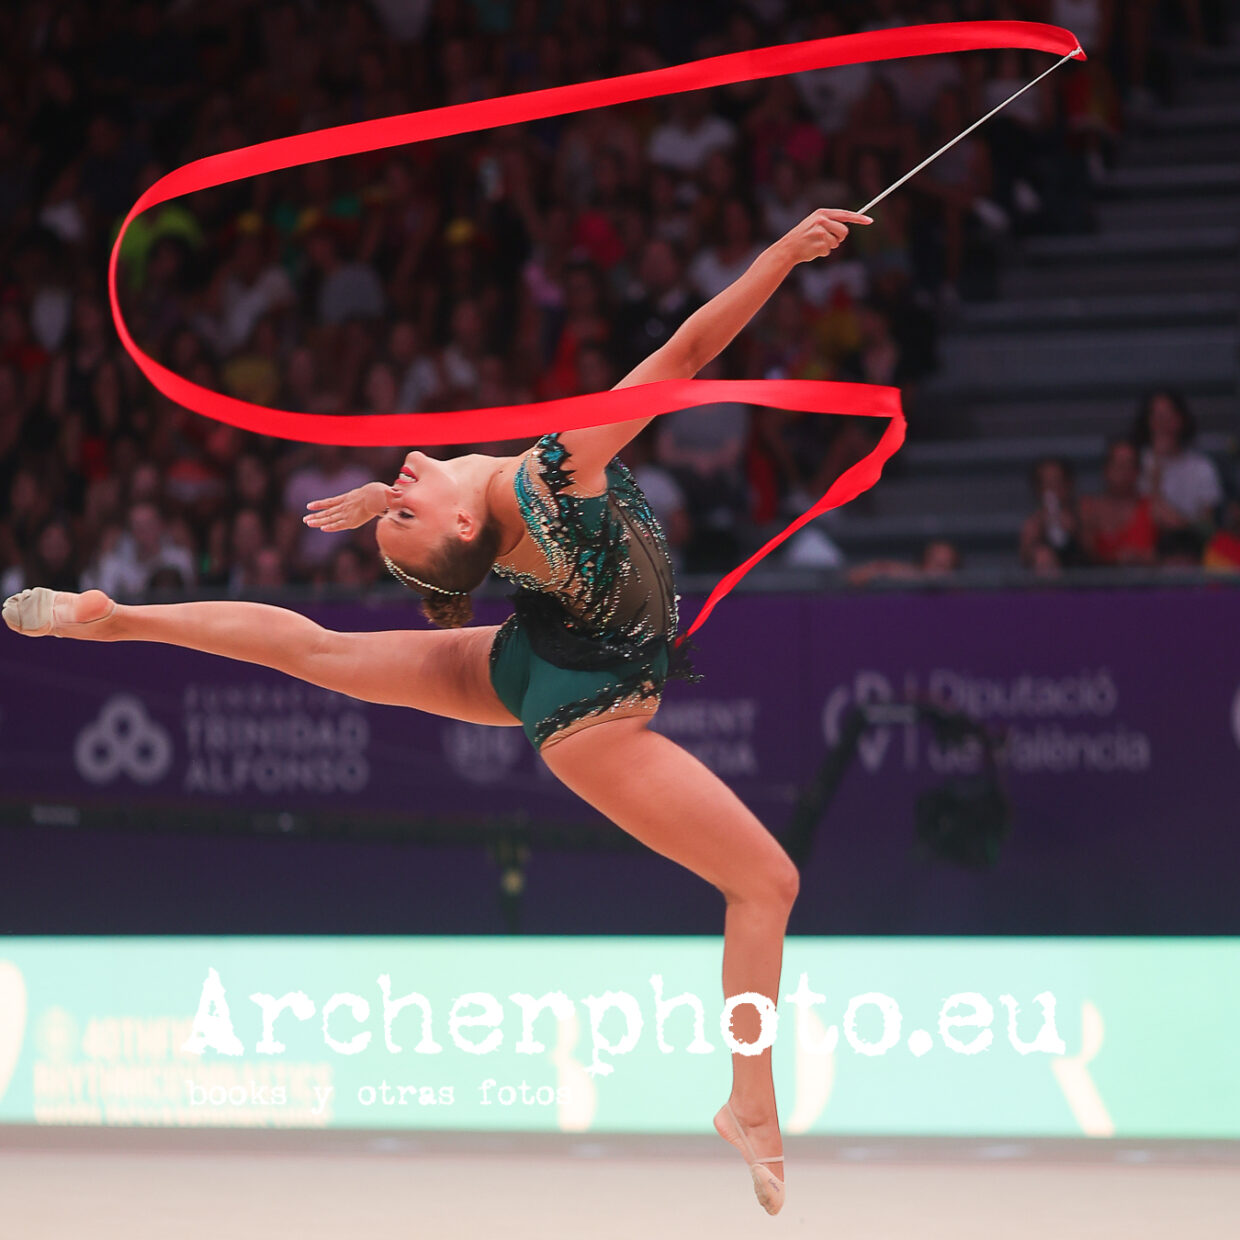 Alva Svennbeck (1), 40th FIG Rhythmic Gymnastics World Championships Valencia 2023, ribbon